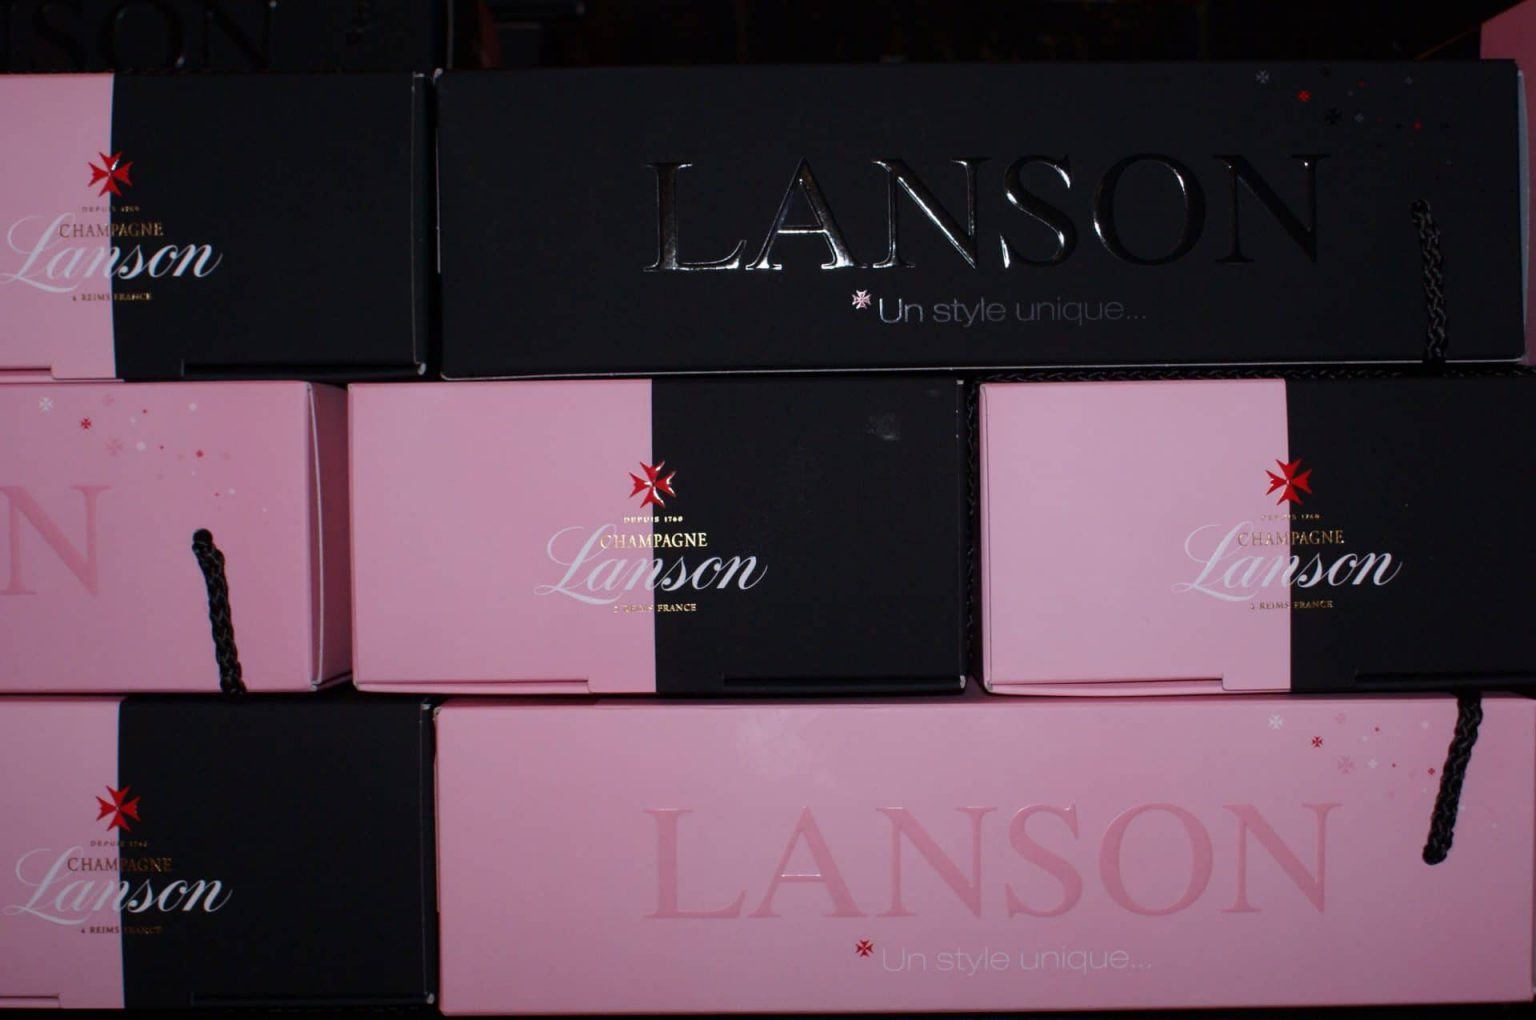 Maison Lanson